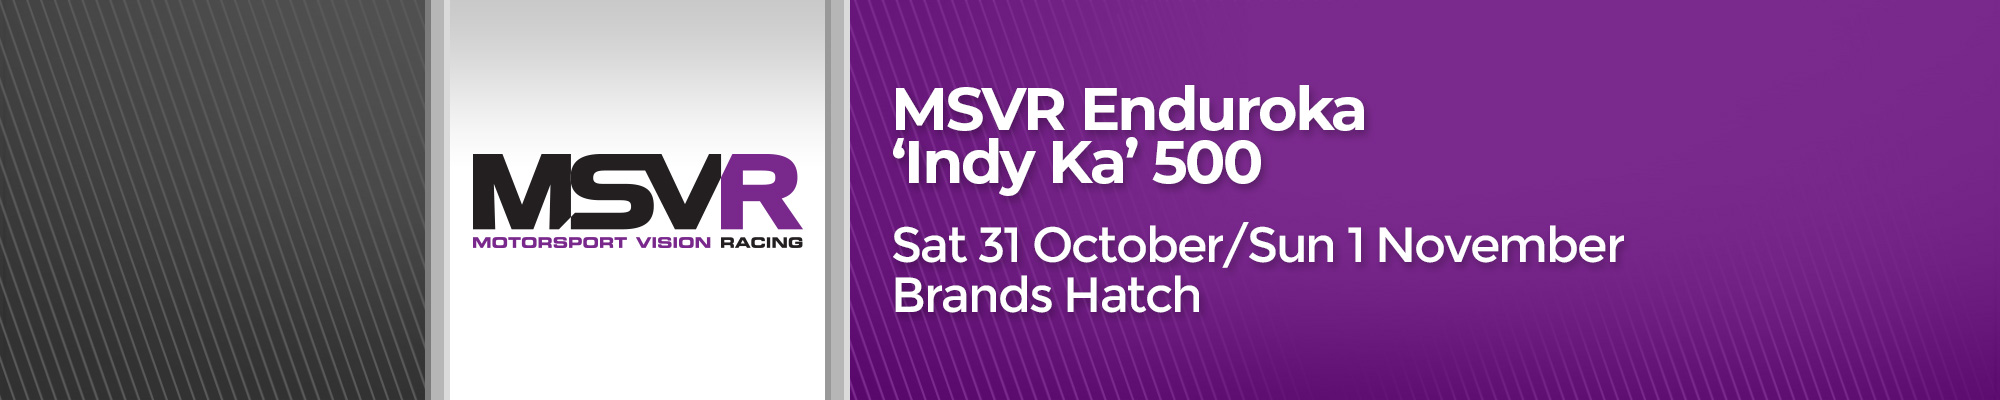  MSVR Brands Hatch Indy, KA 500